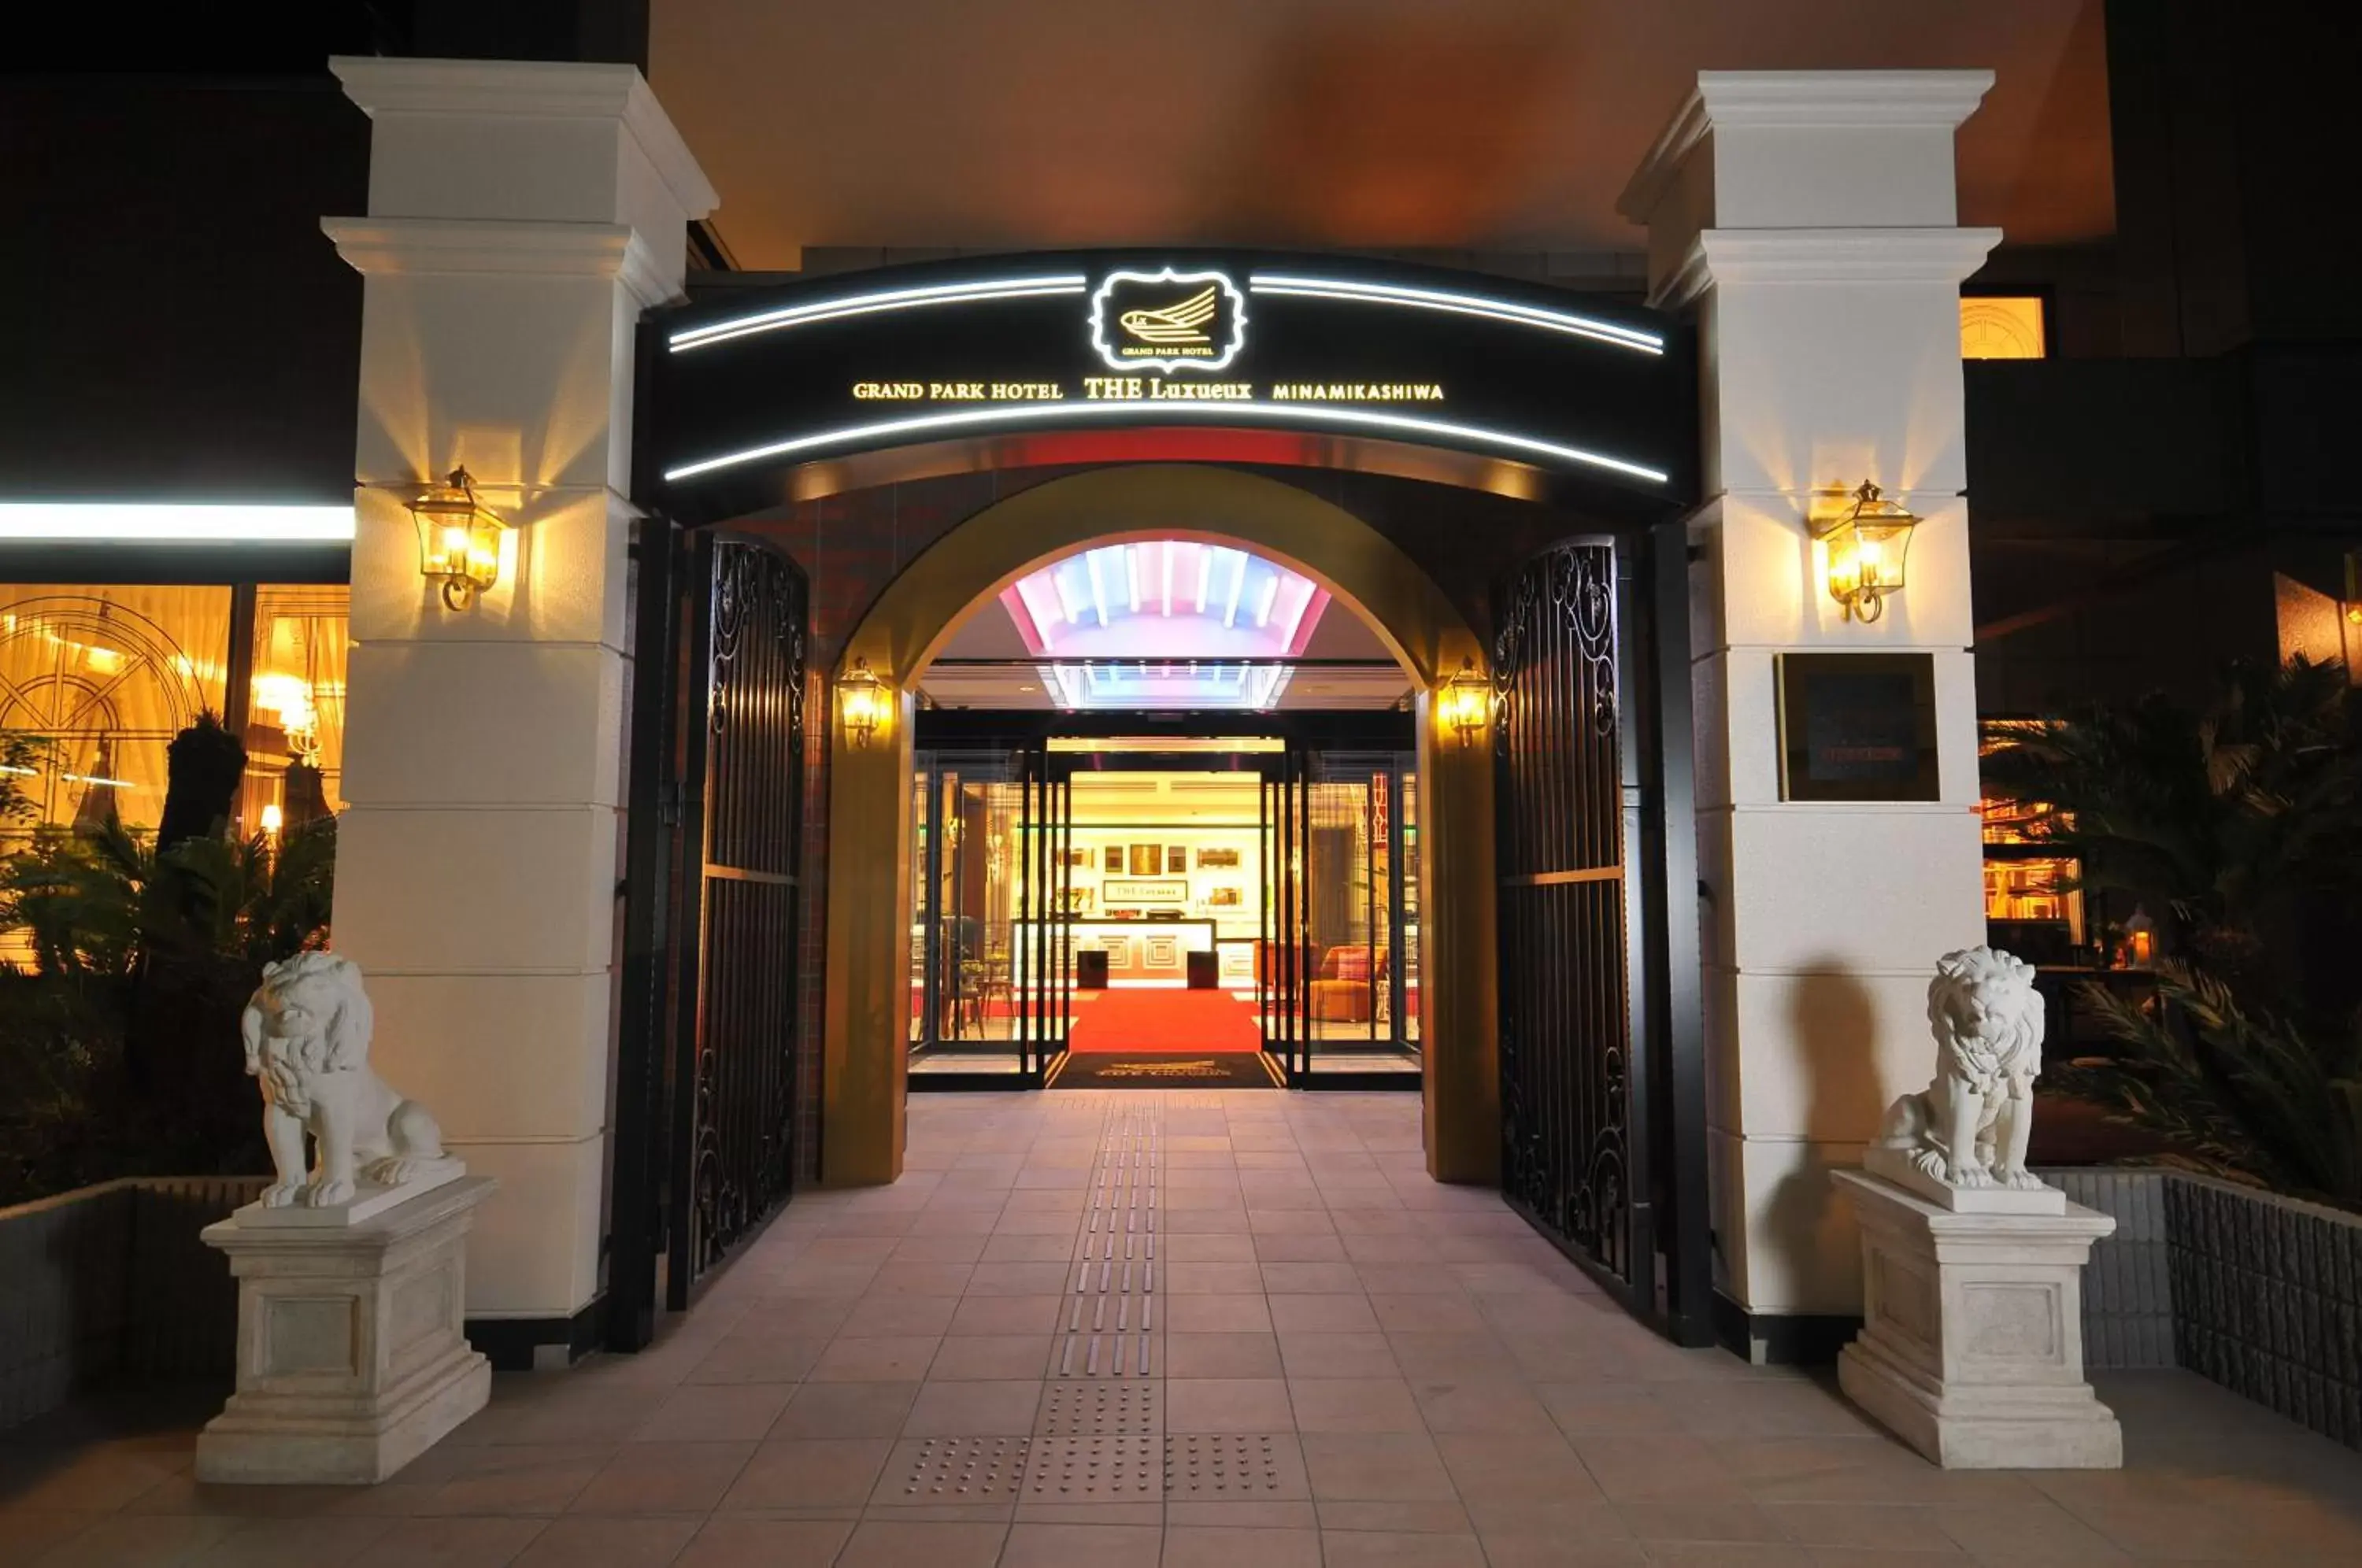 Facade/entrance in Grand Park Hotel The Luxueux Minami Kashiwa